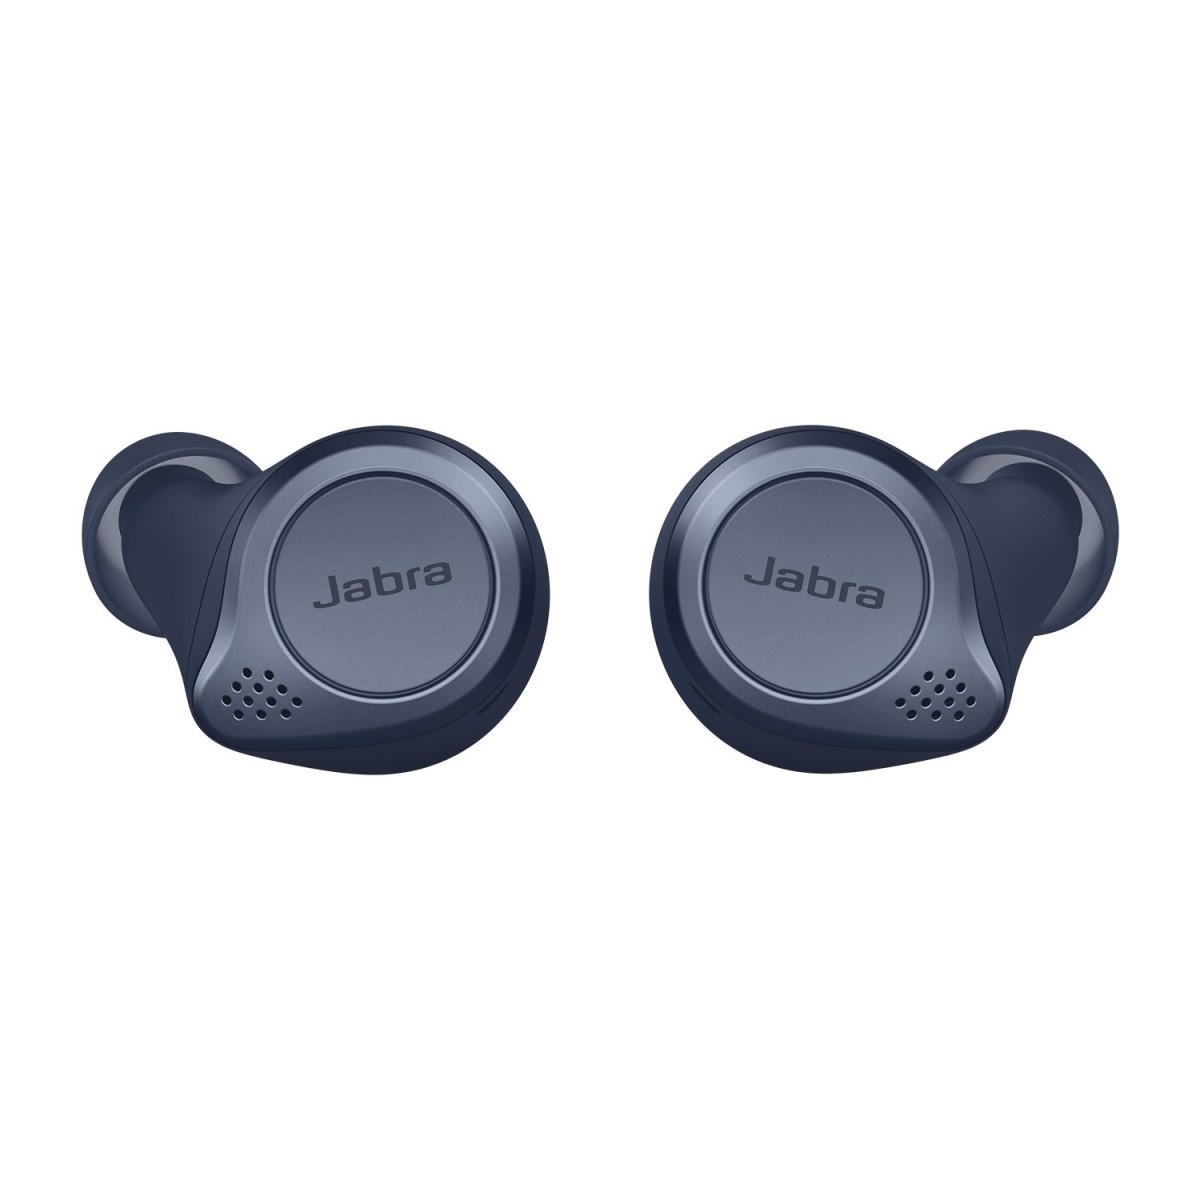 Jabra Elite Active 75t - Headset - In-ear - Sports - Navy - Binaural - Multi-key